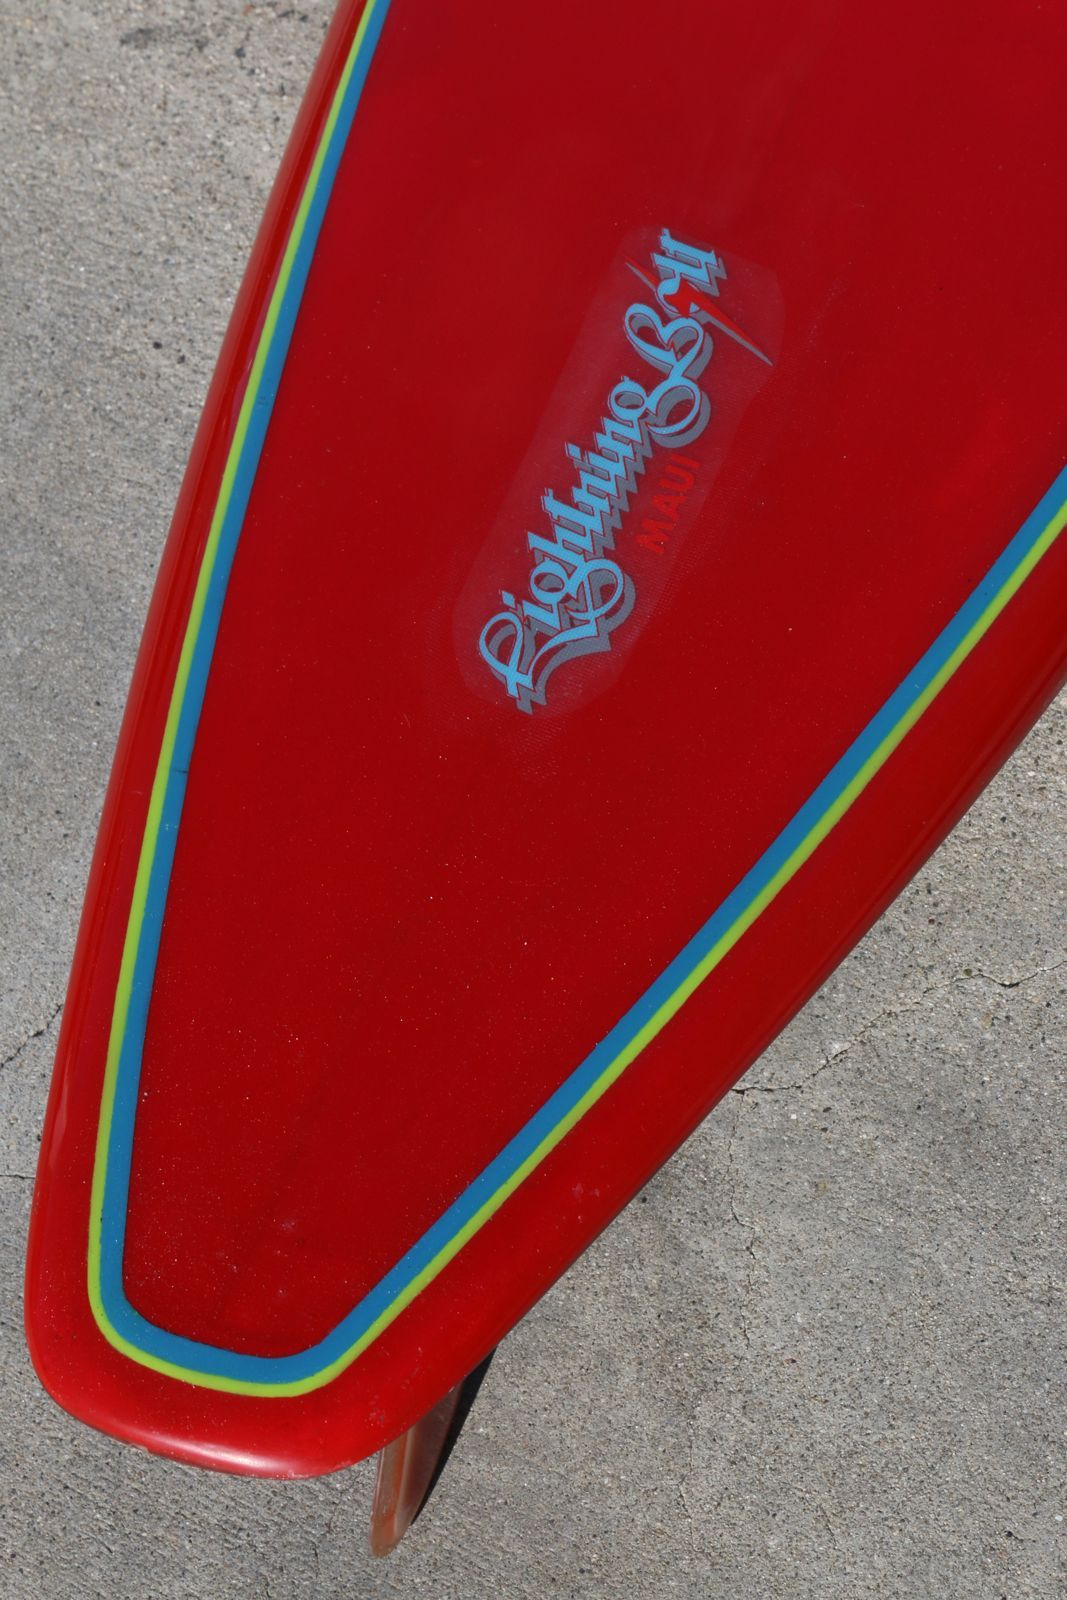 Fiberglass Early 1970s Surfboard with Lightning Bolt Logo, Restored